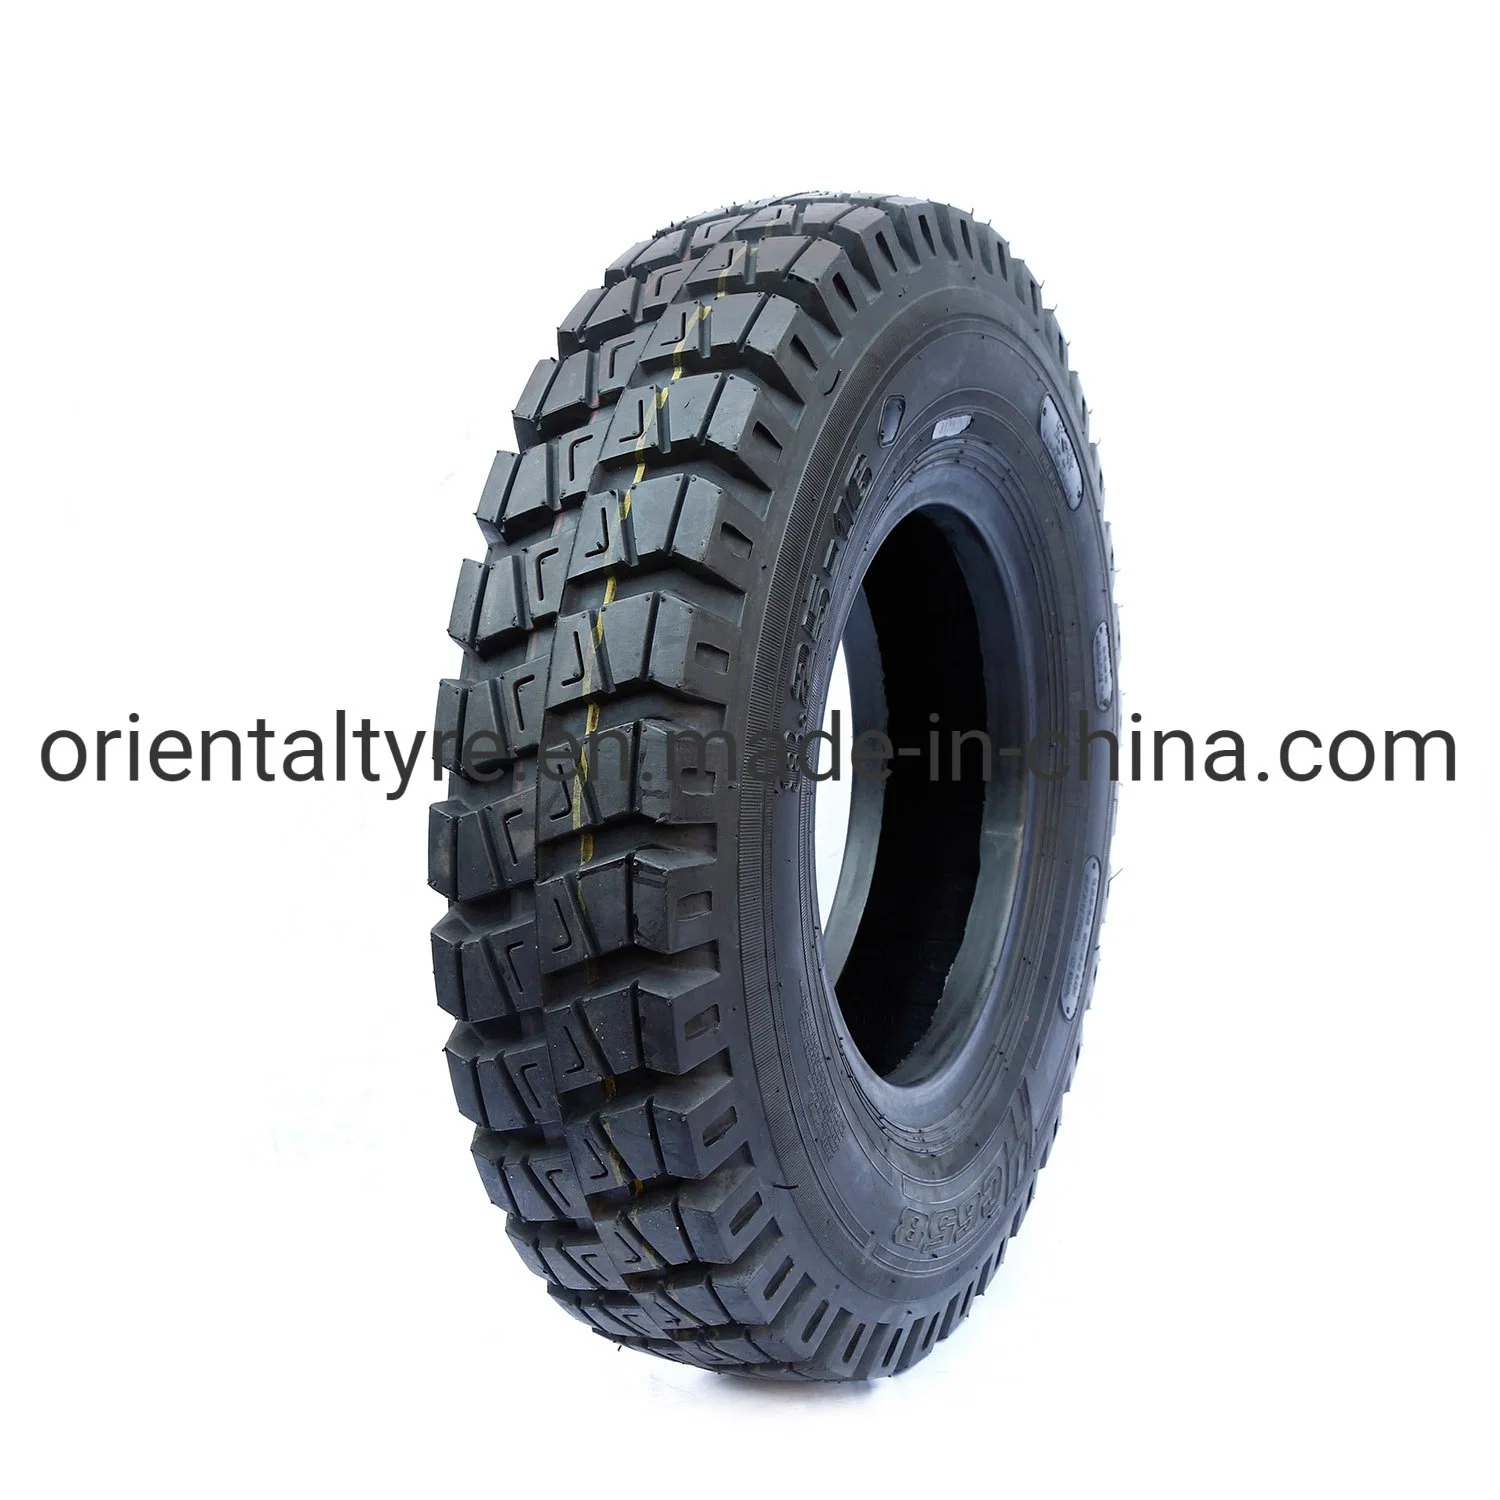 Top Quality Bias Nylon off-The-Road OTR Tyre E3/L3 Construction Tires Wheel Earthmover Grader Loader Dozer Dump Truck Tyre OTR 14/90-16 16/70-16